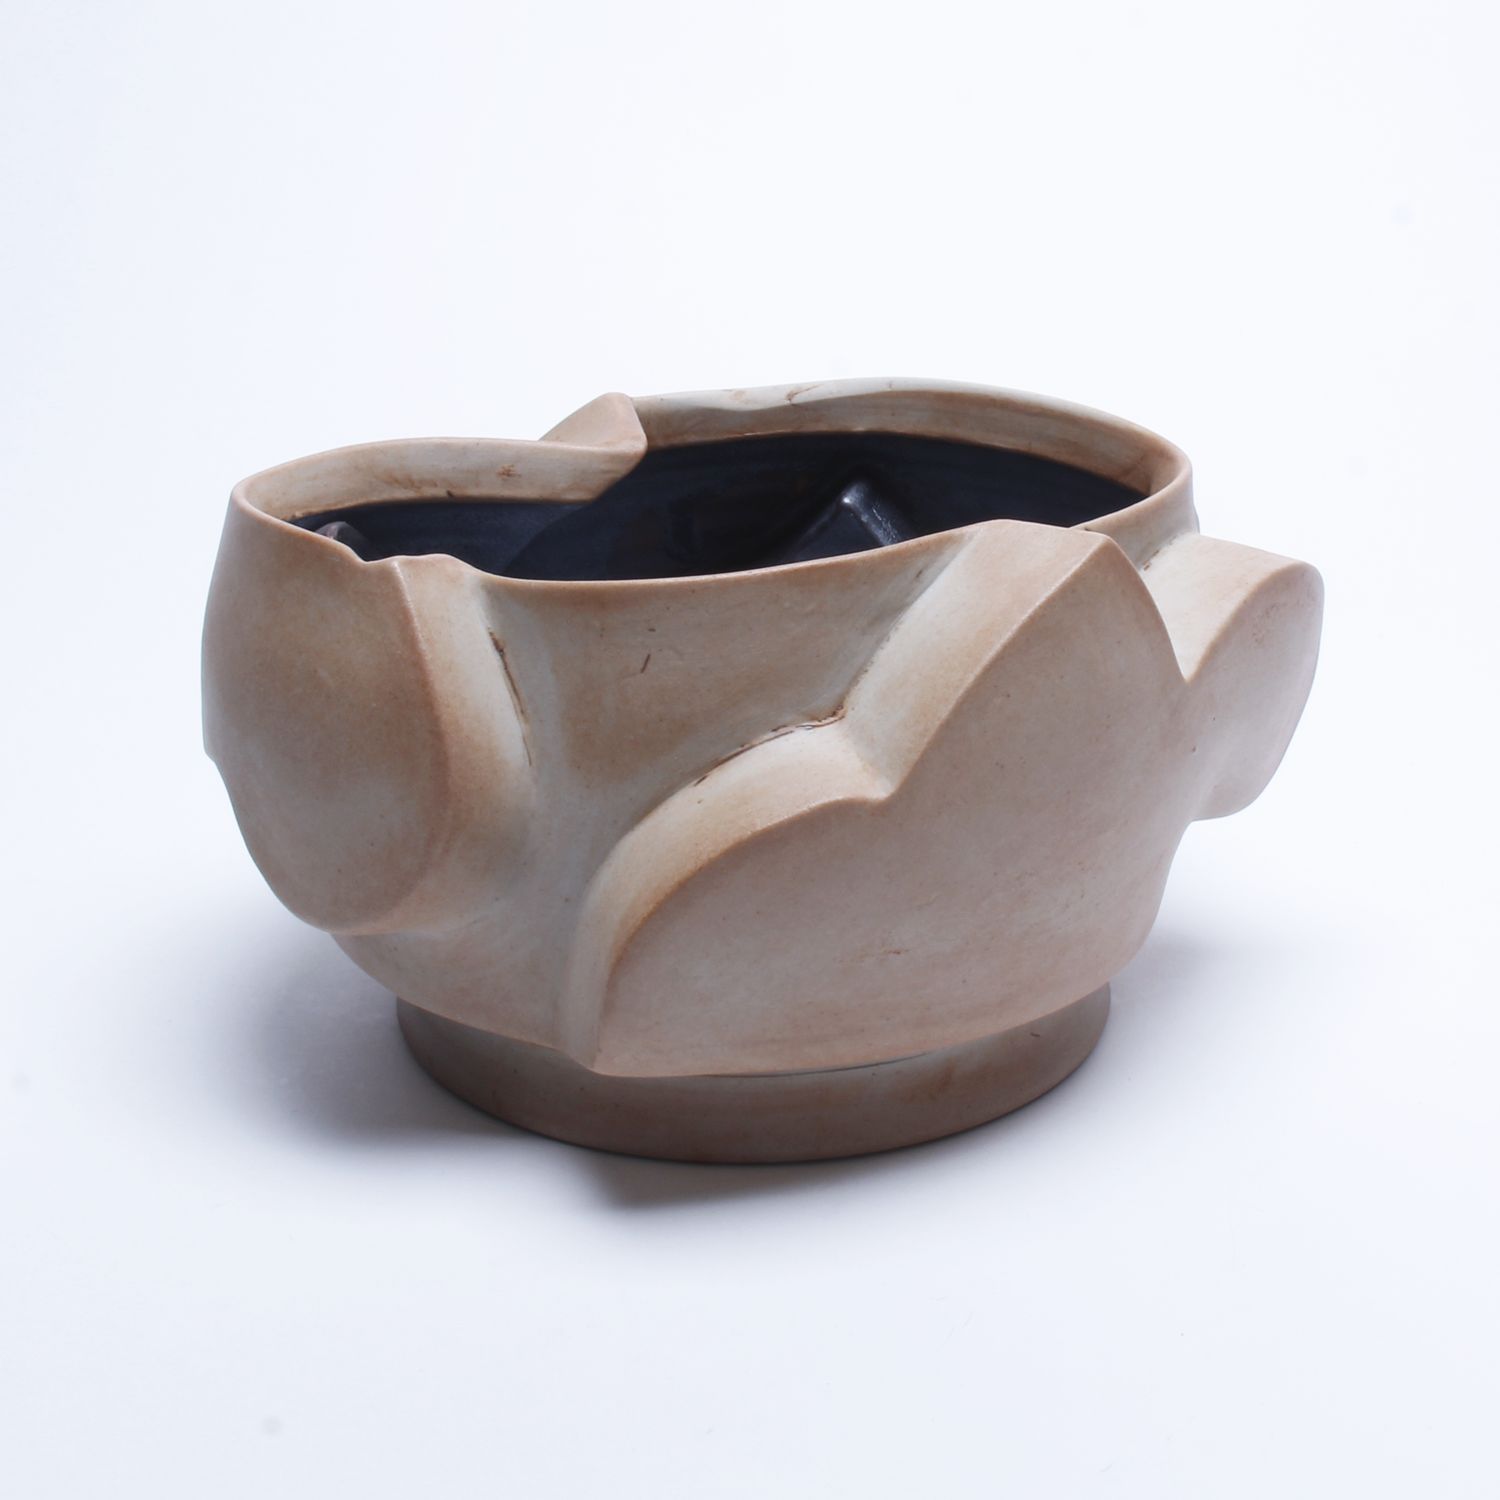 Bruce Cochrane: Rust Medium Relief Bowl Product Image 3 of 4